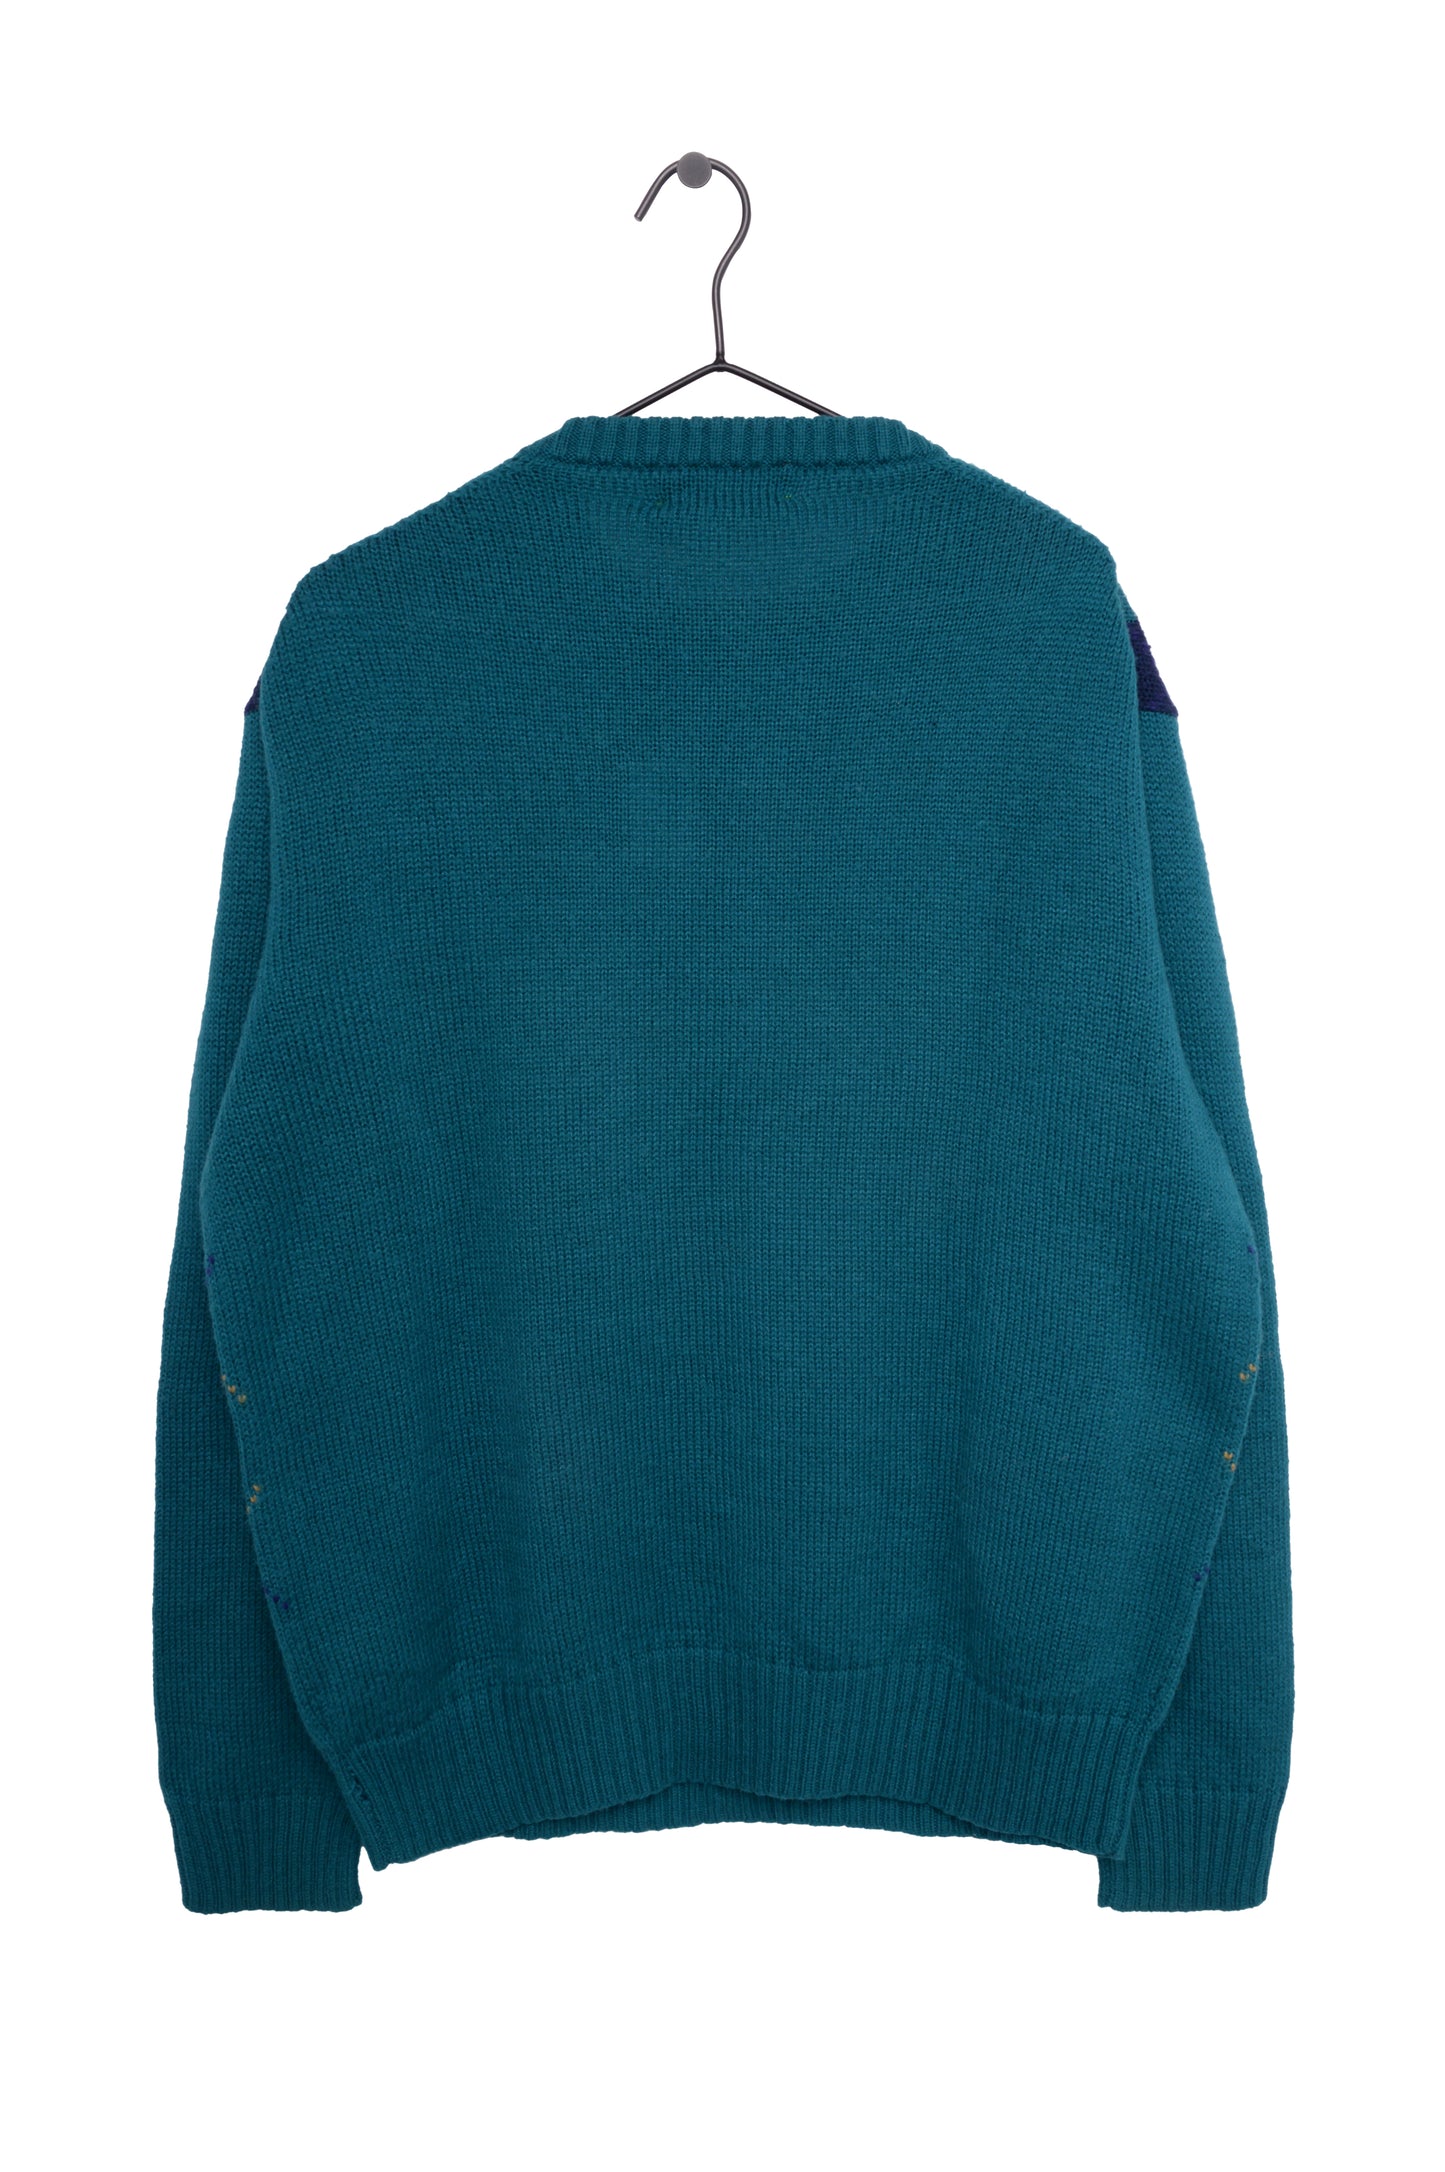 Teal Argyle Sweater